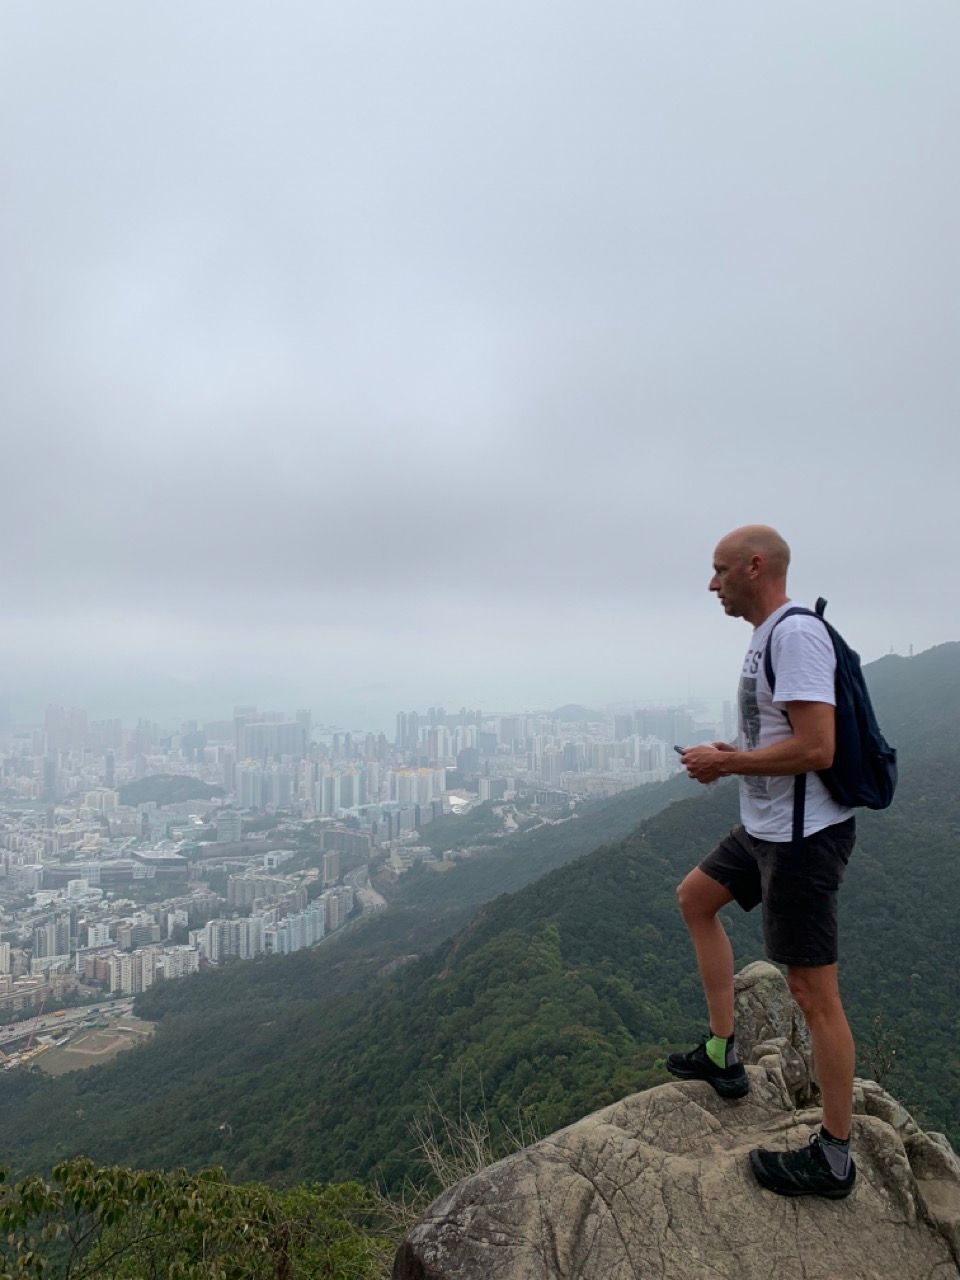 The Lion Rock (獅子山): HK urban hike